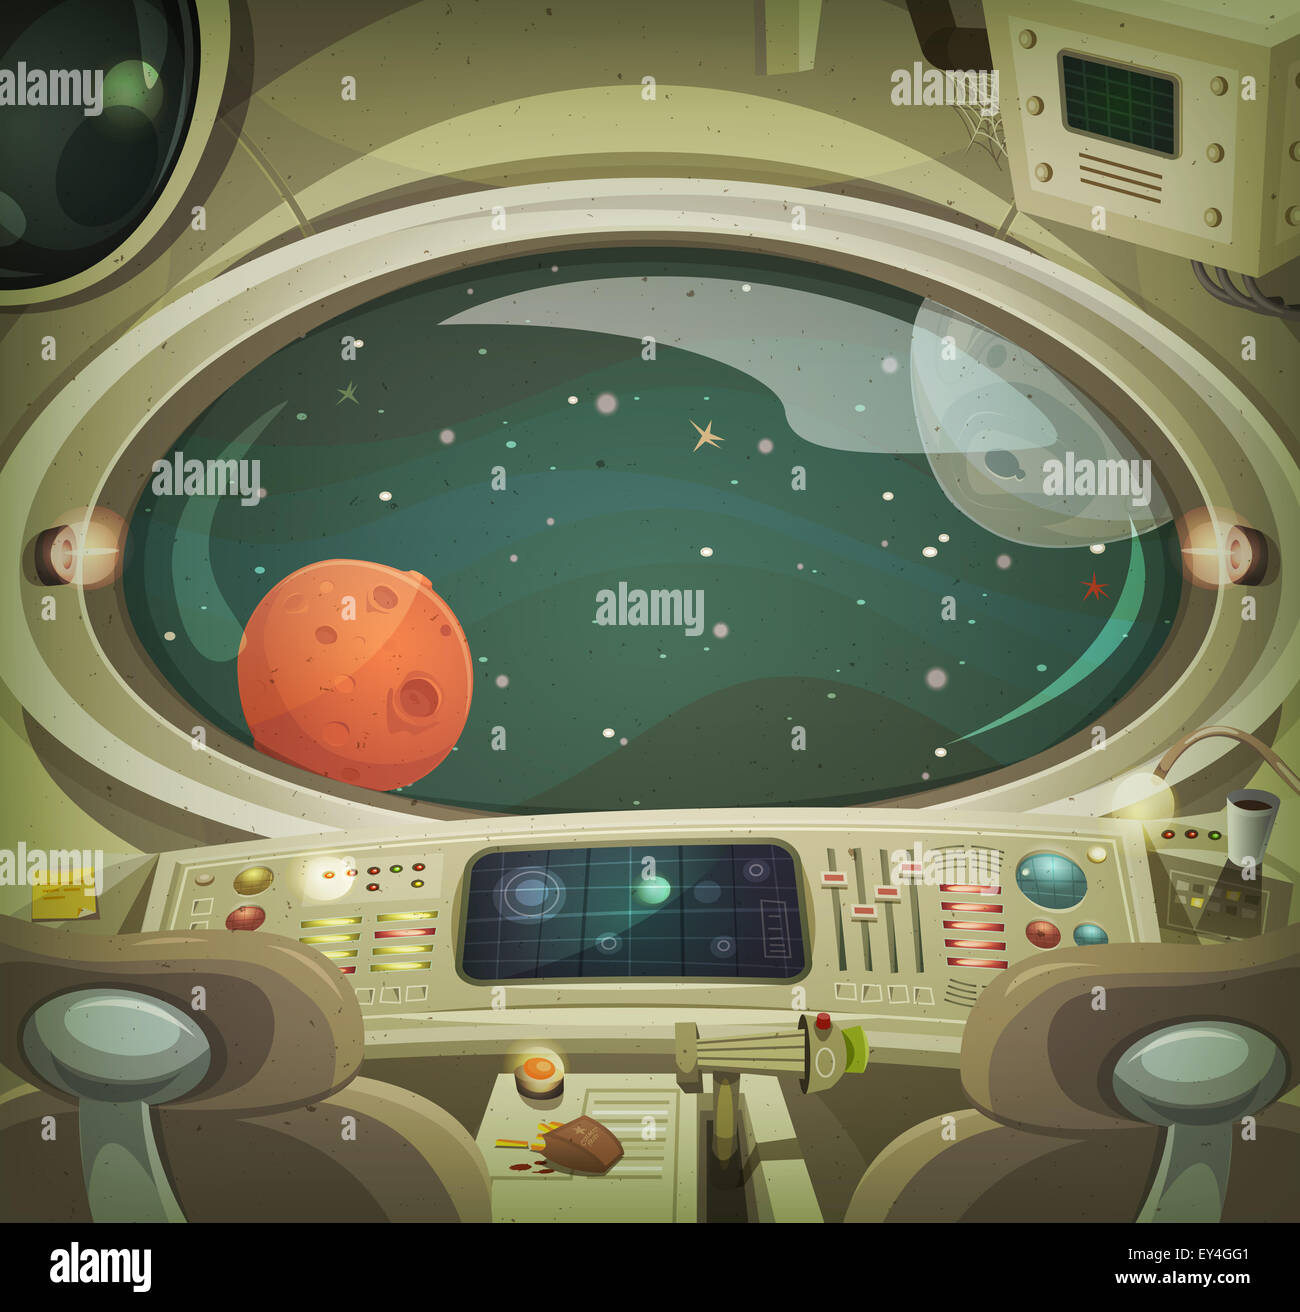 Illustration of a cartoon graphic scene of cosmic spacecraft interior traveling through scifi cosmos Stock Photo